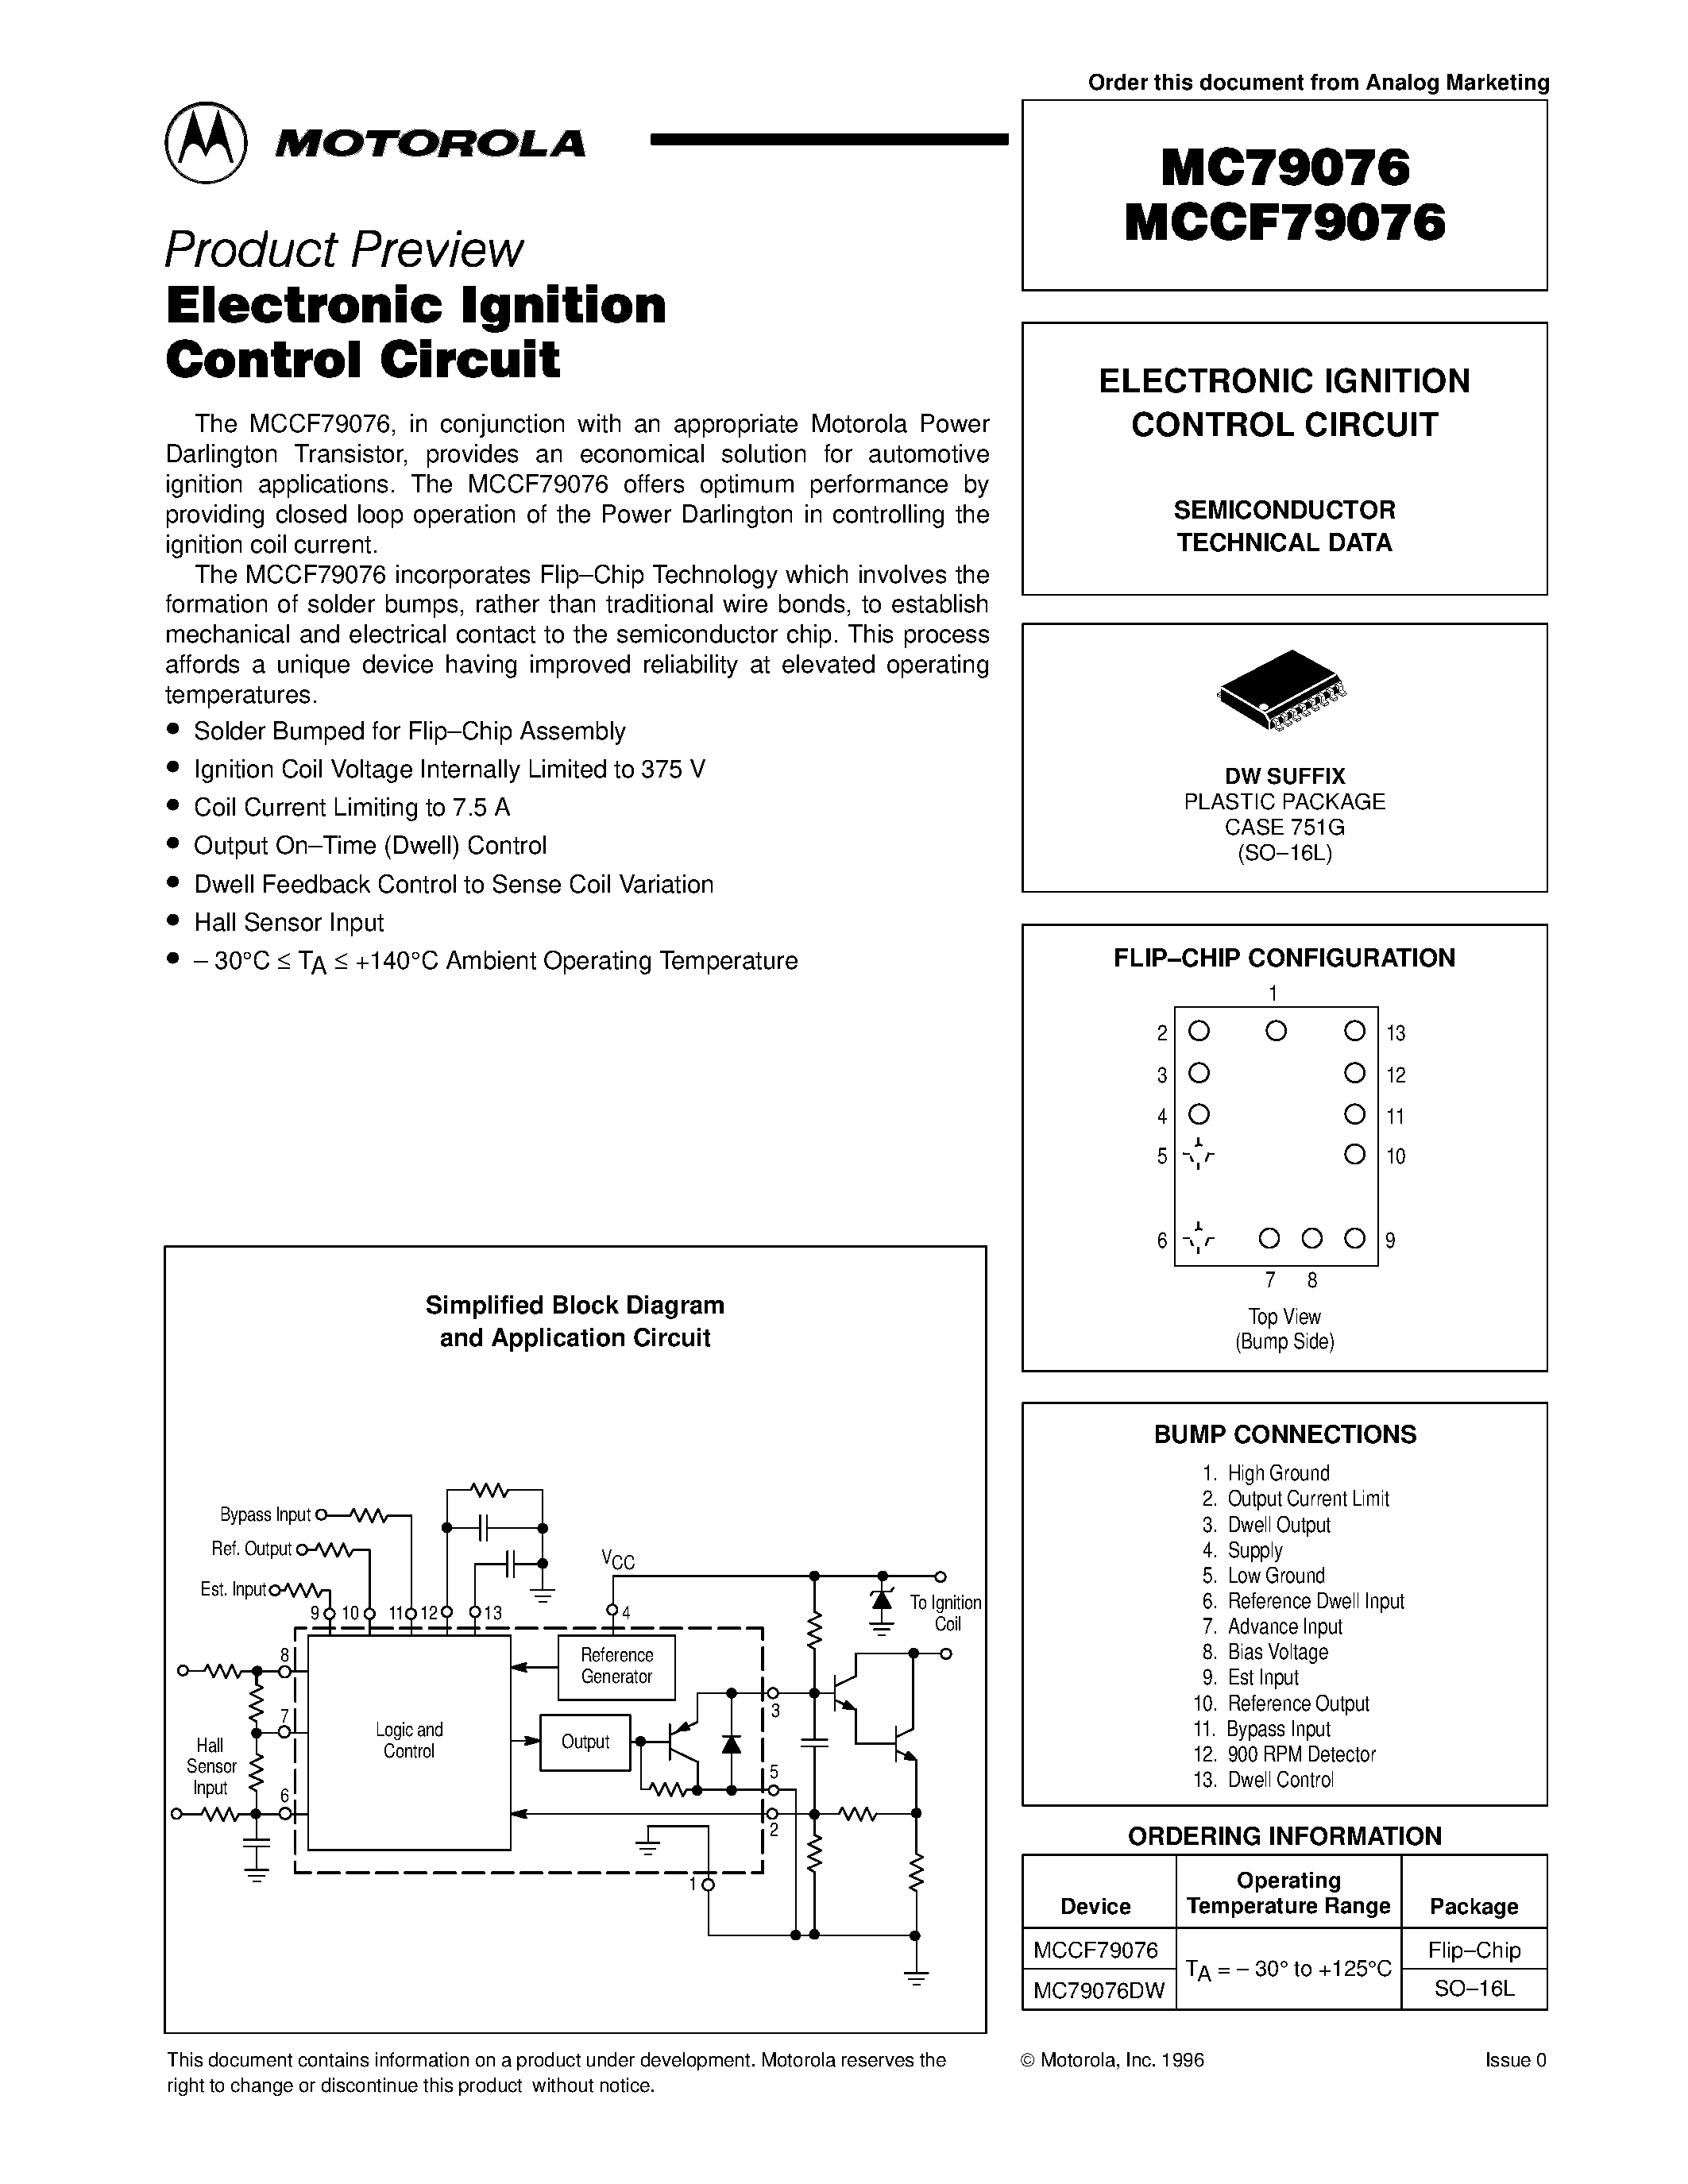 Datasheet MC79076 - ELECTRONIC IGNITION CONTROL CIRCUIT page 1